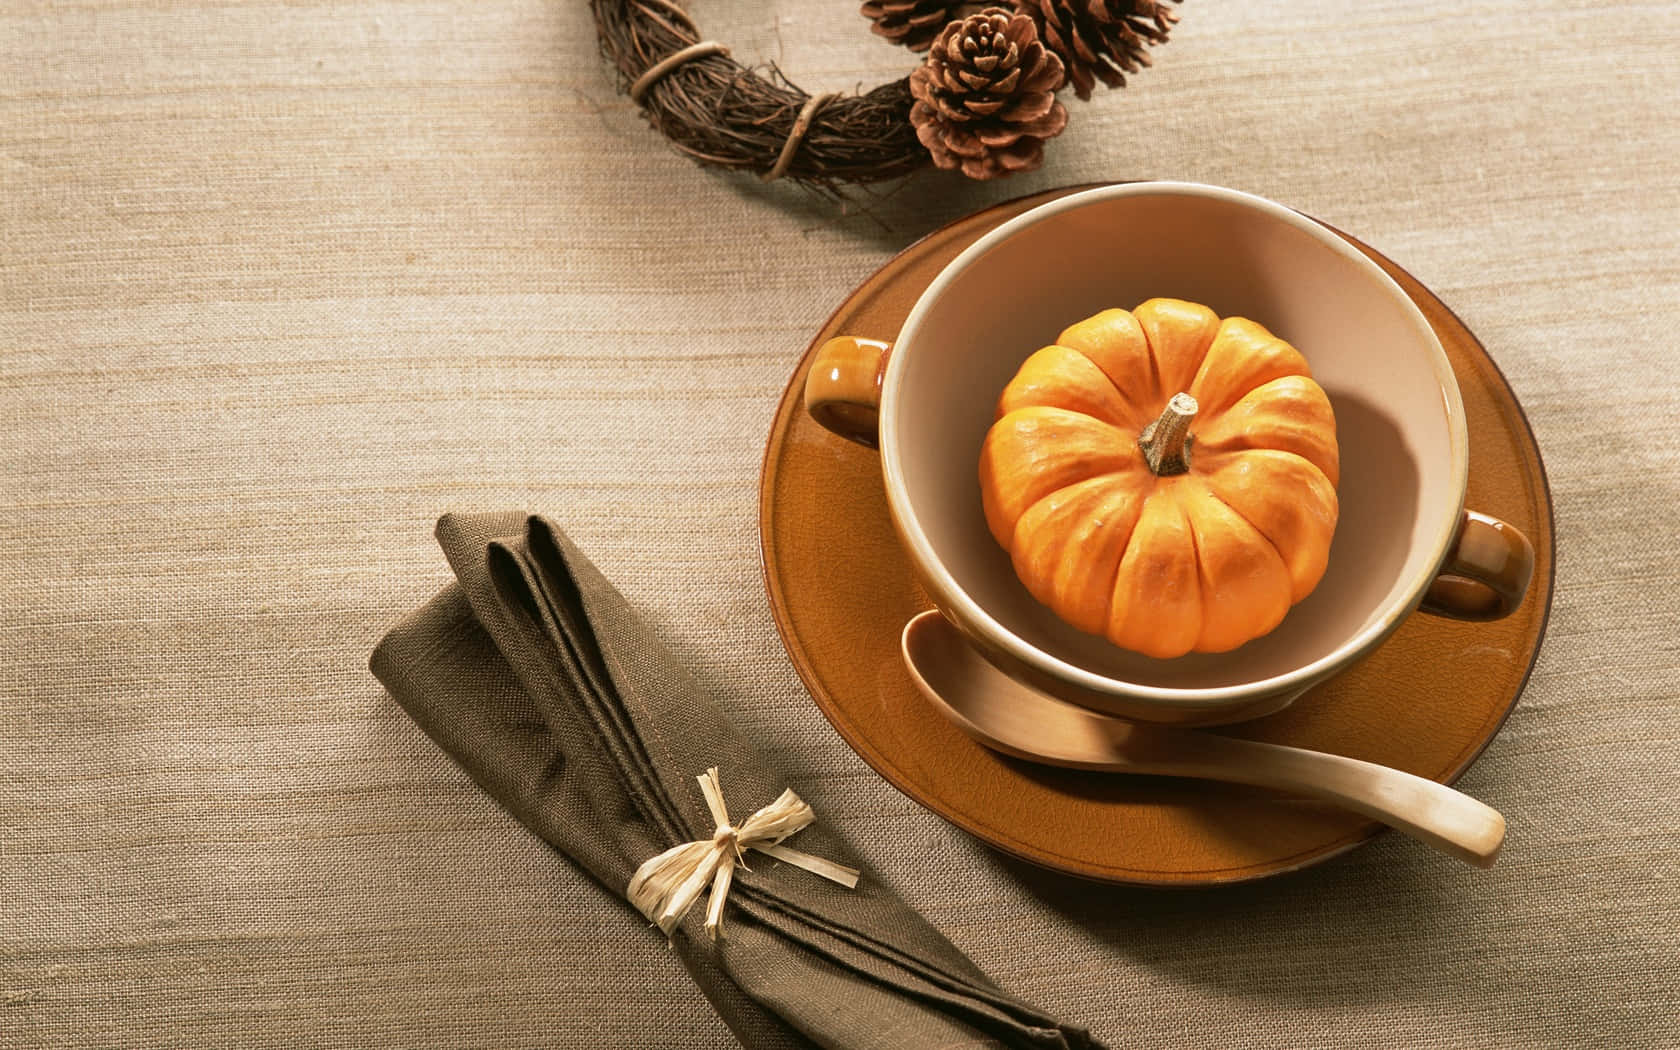 Autumn Charm - A ripe pumpkin in a picturesque setting Wallpaper